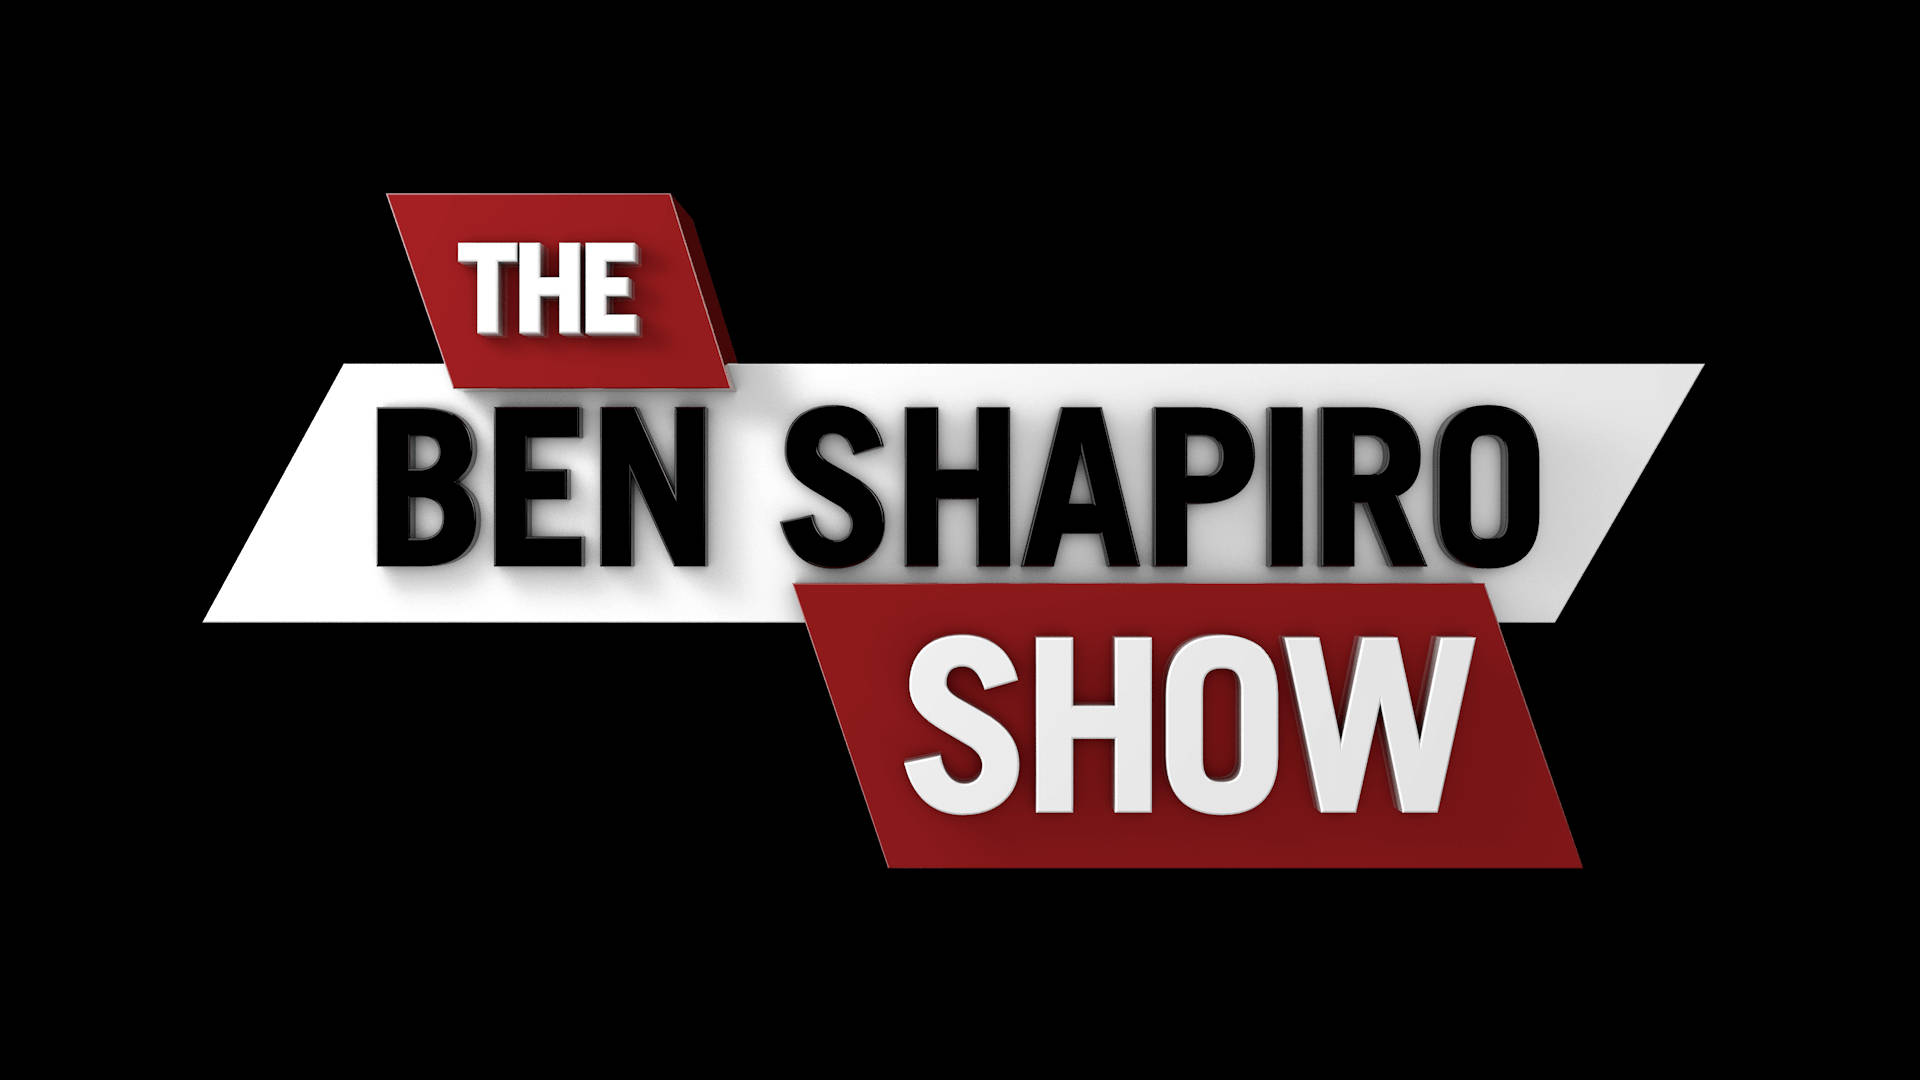 The Ben Shapiro Show Logo Wallpaper